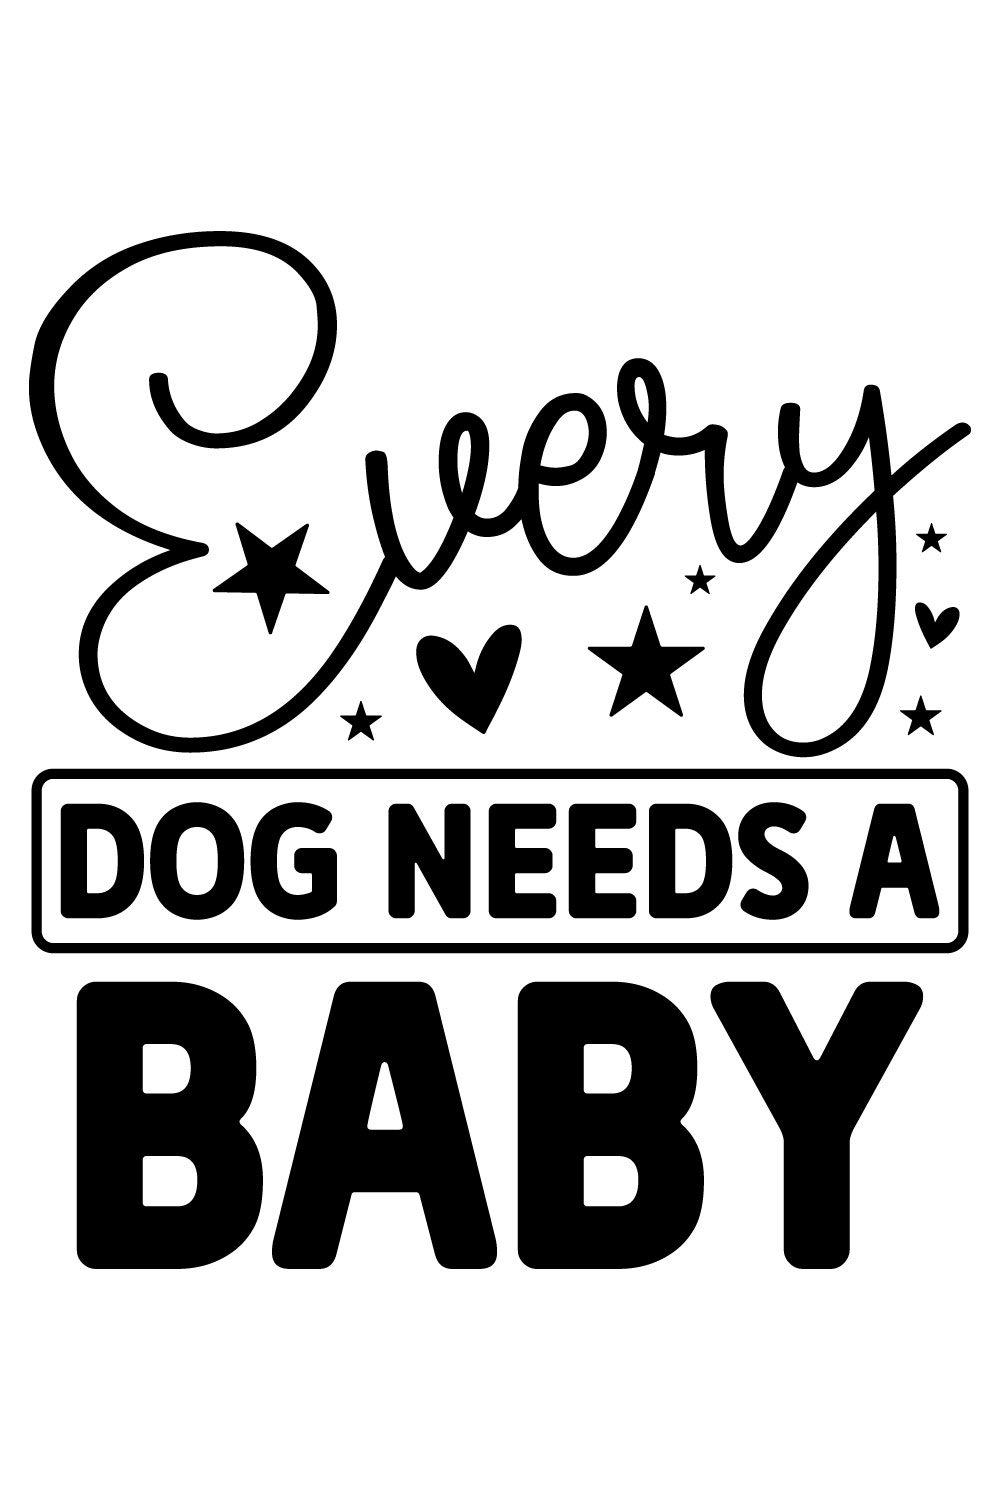 every dog needs a baby 2 396